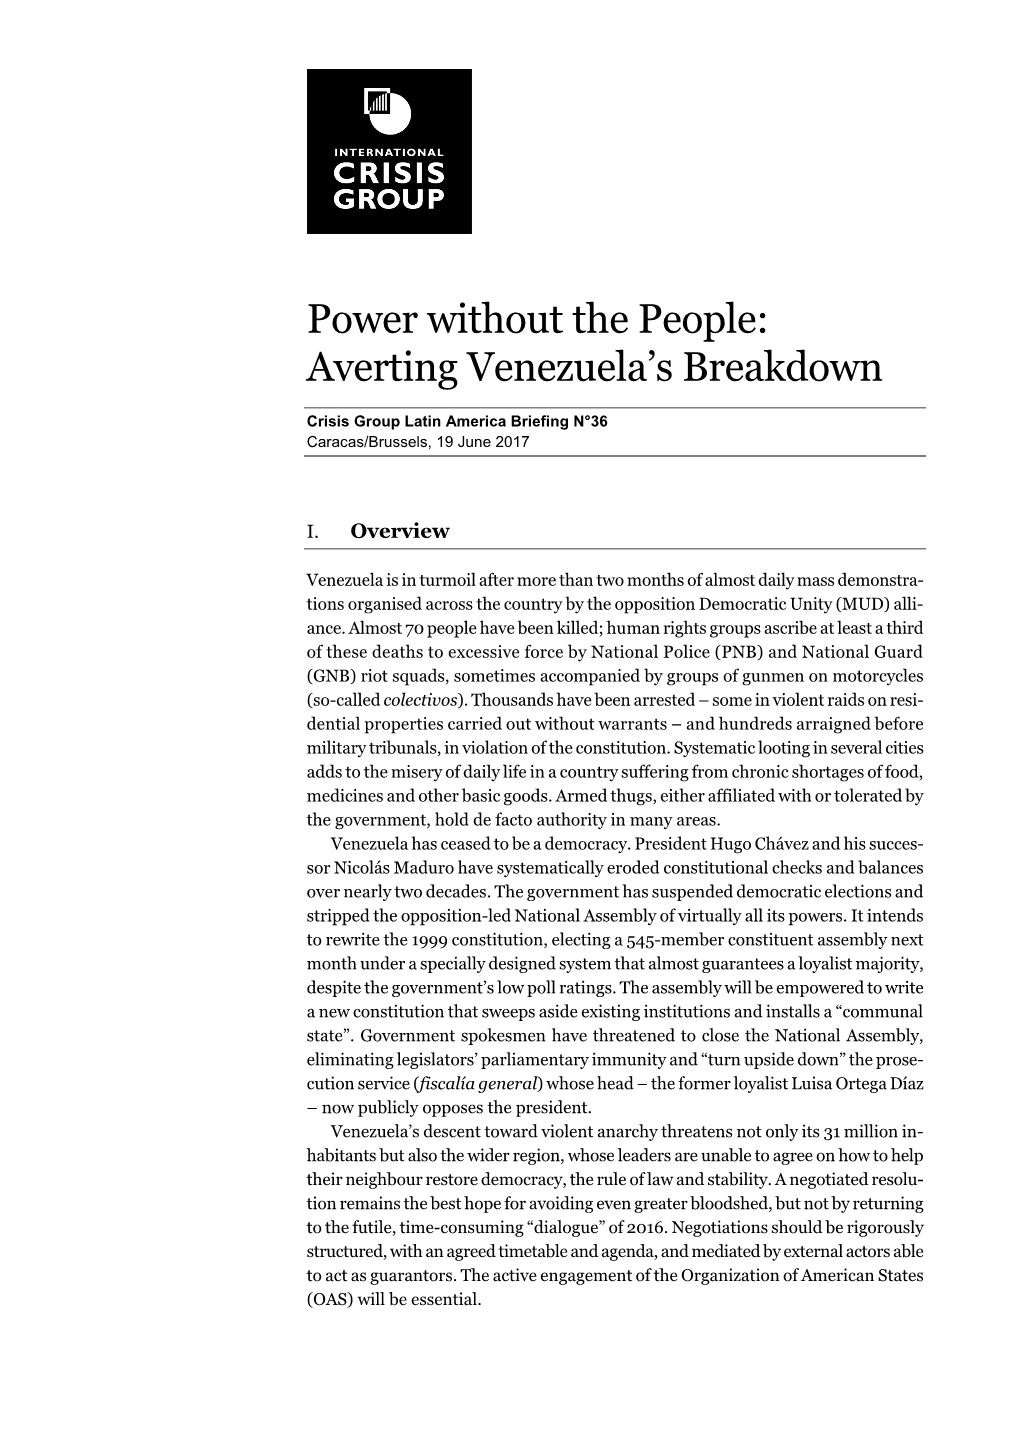 Power Without the People: Averting Venezuela's Breakdown